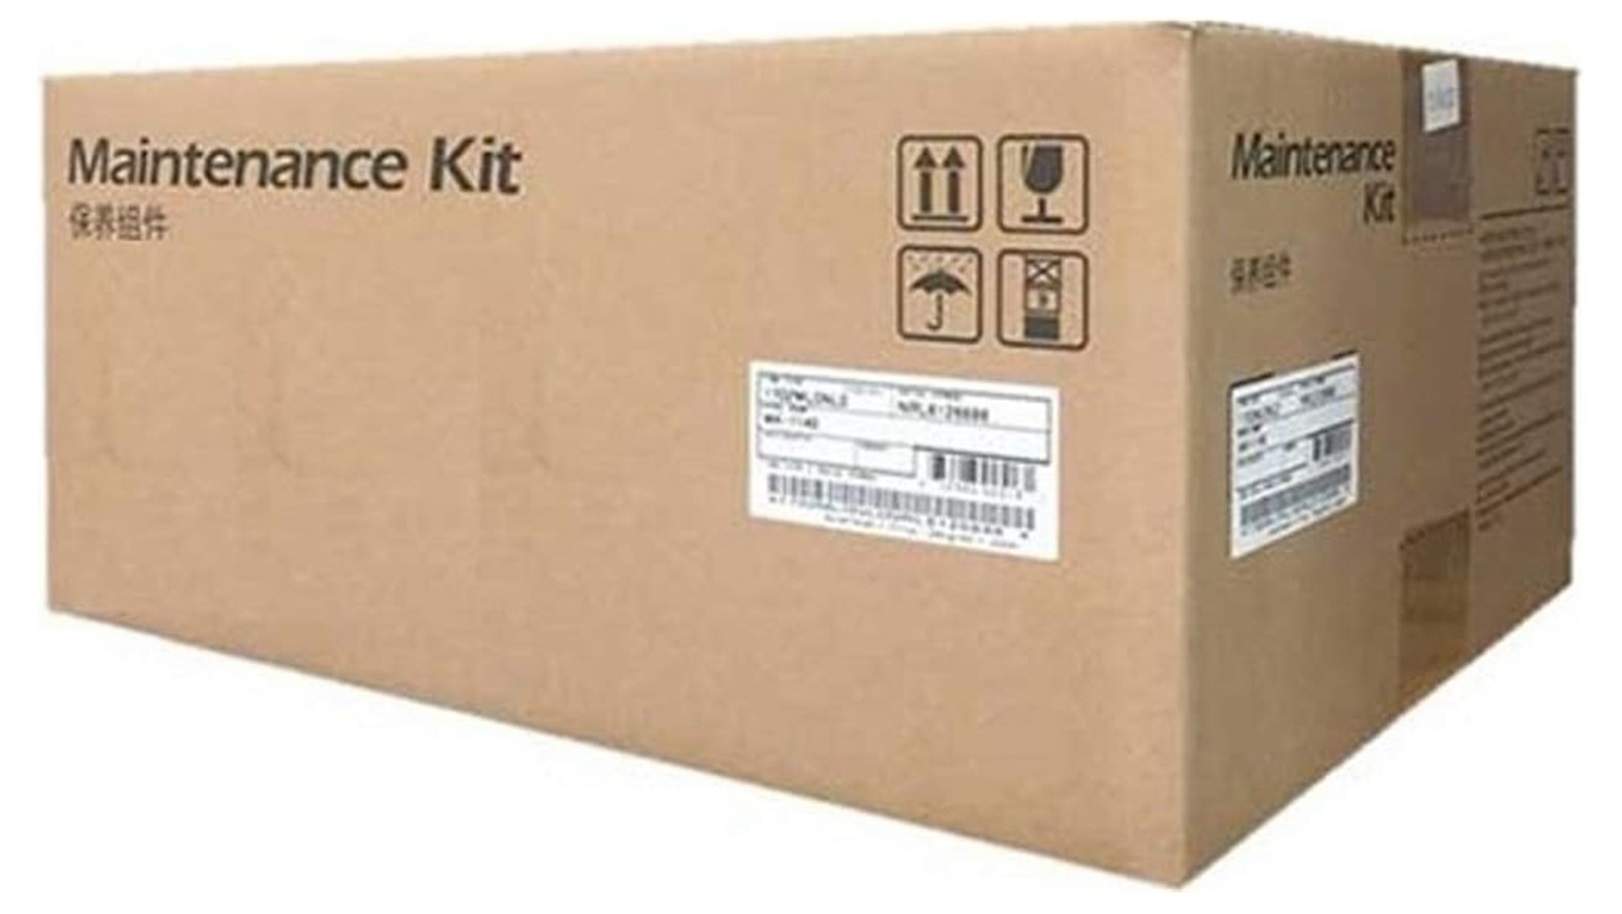 Kit de Mantenimiento Kyocera MK-3382 / 500k | 2311 / 170C0T7US0 - Original Kit de Mantenimiento Kyocera MK-3382. Rendimiento 500.000 Páginas. MA5500ifx MA6000ifx PA5000x PA5500x PA6000x  